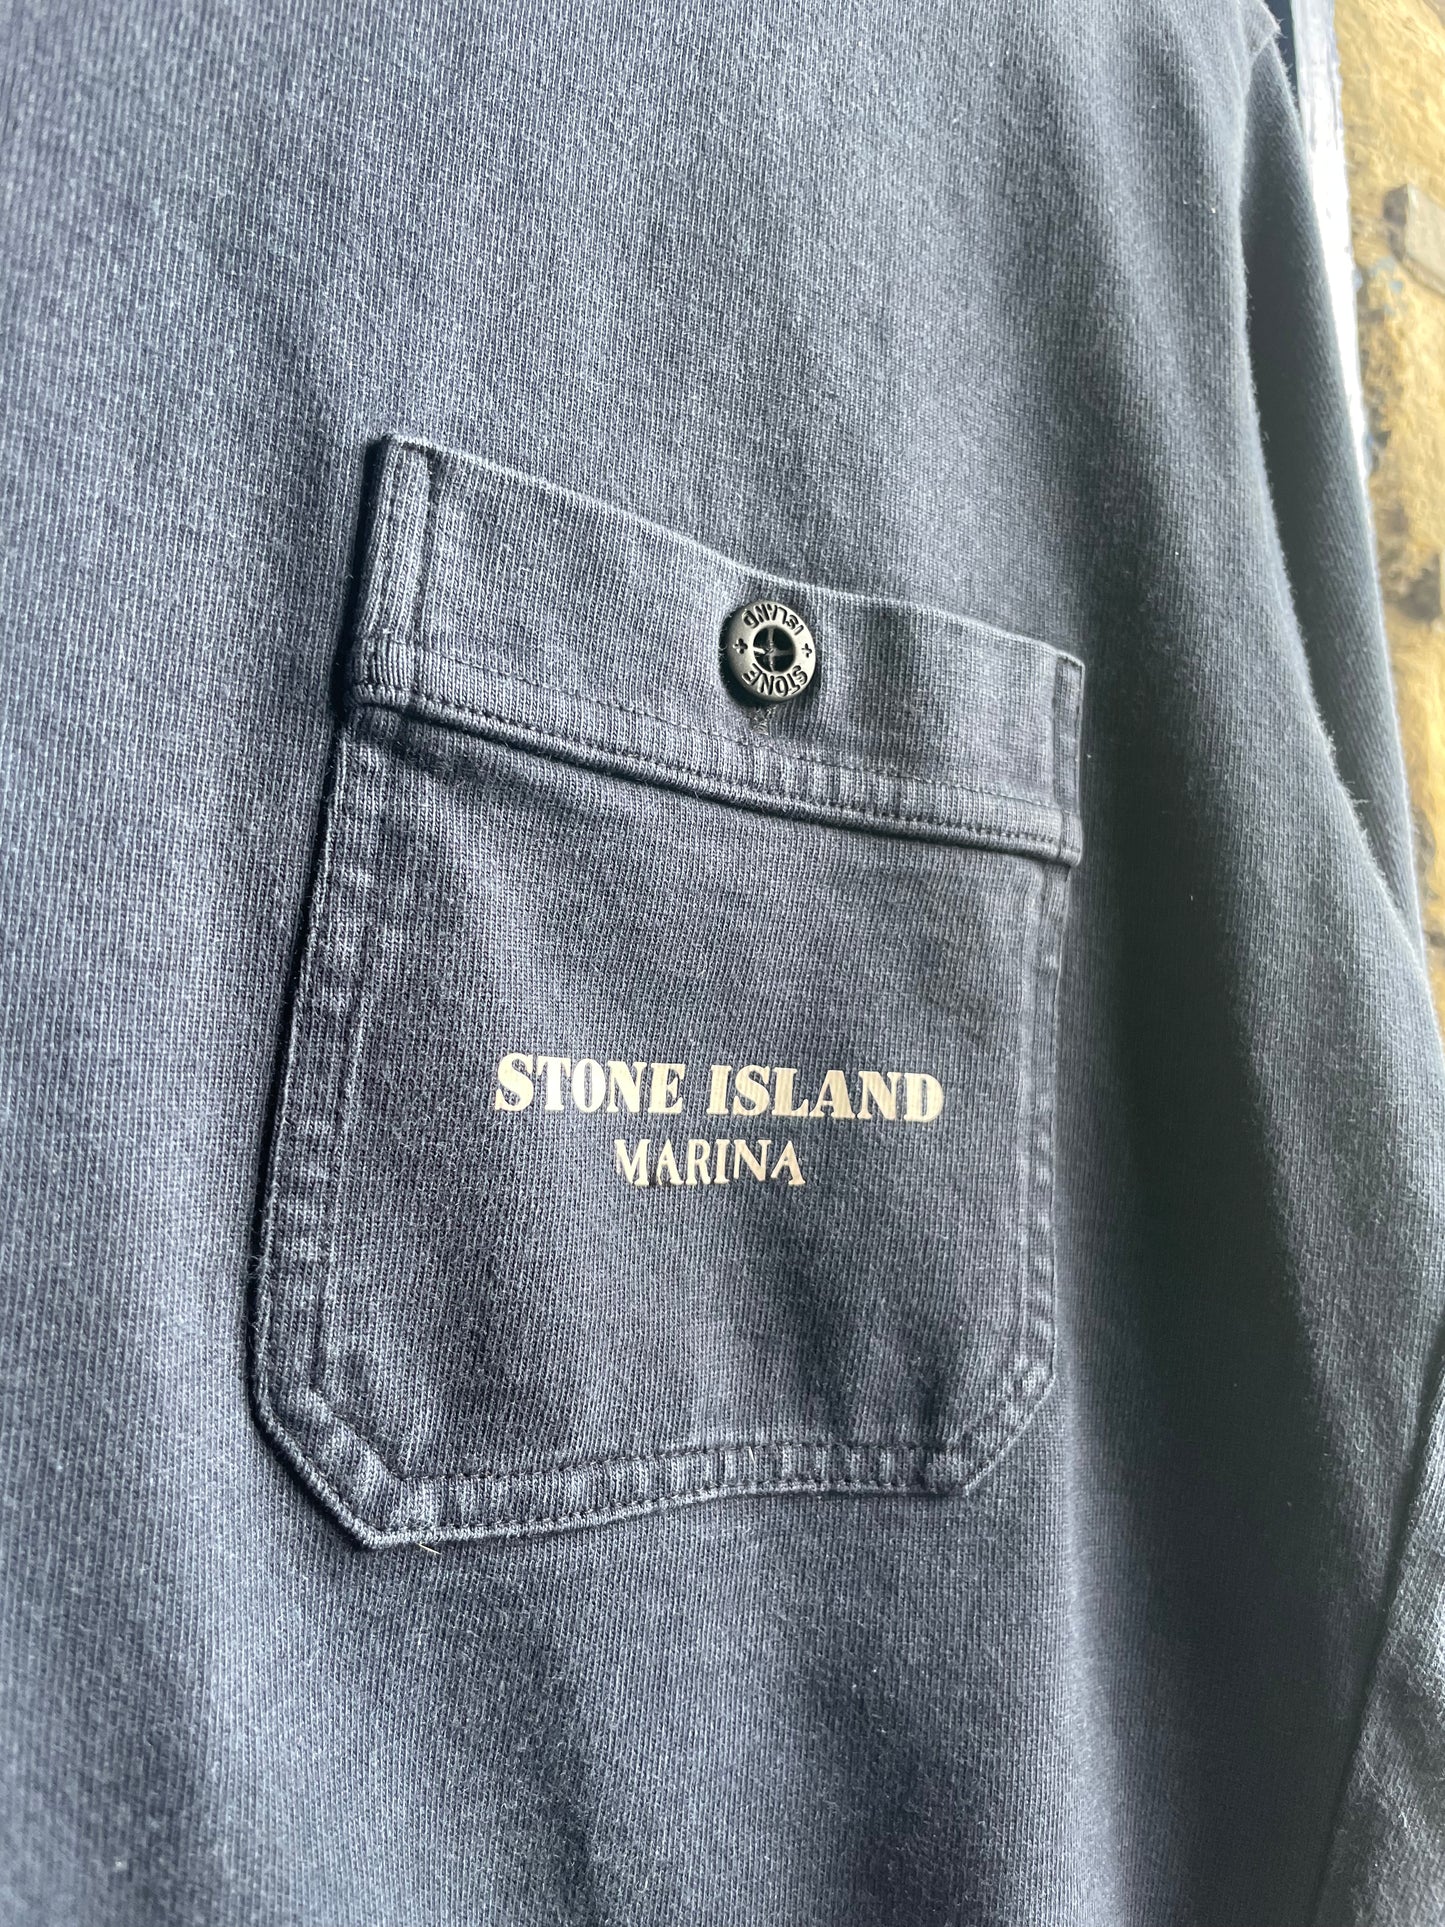 Stone Island Marina long sleeve (M)